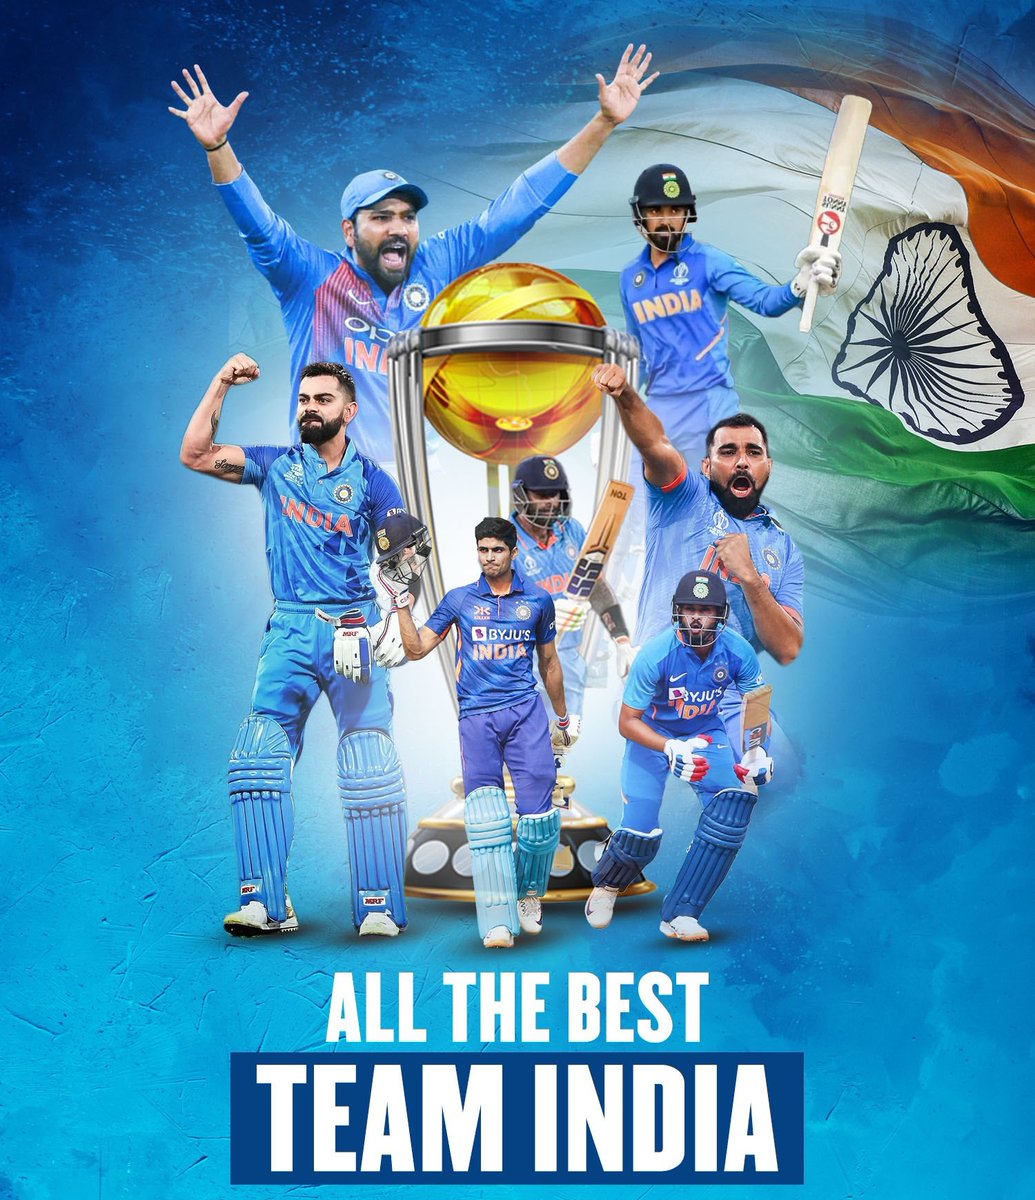 Time to fulfill the #gloriouspurpose , Goodluck #TeamIndia #INDvsAUSfinal #INDvsAUS #TeamIndiainFinal #ICCWorldCupFinal